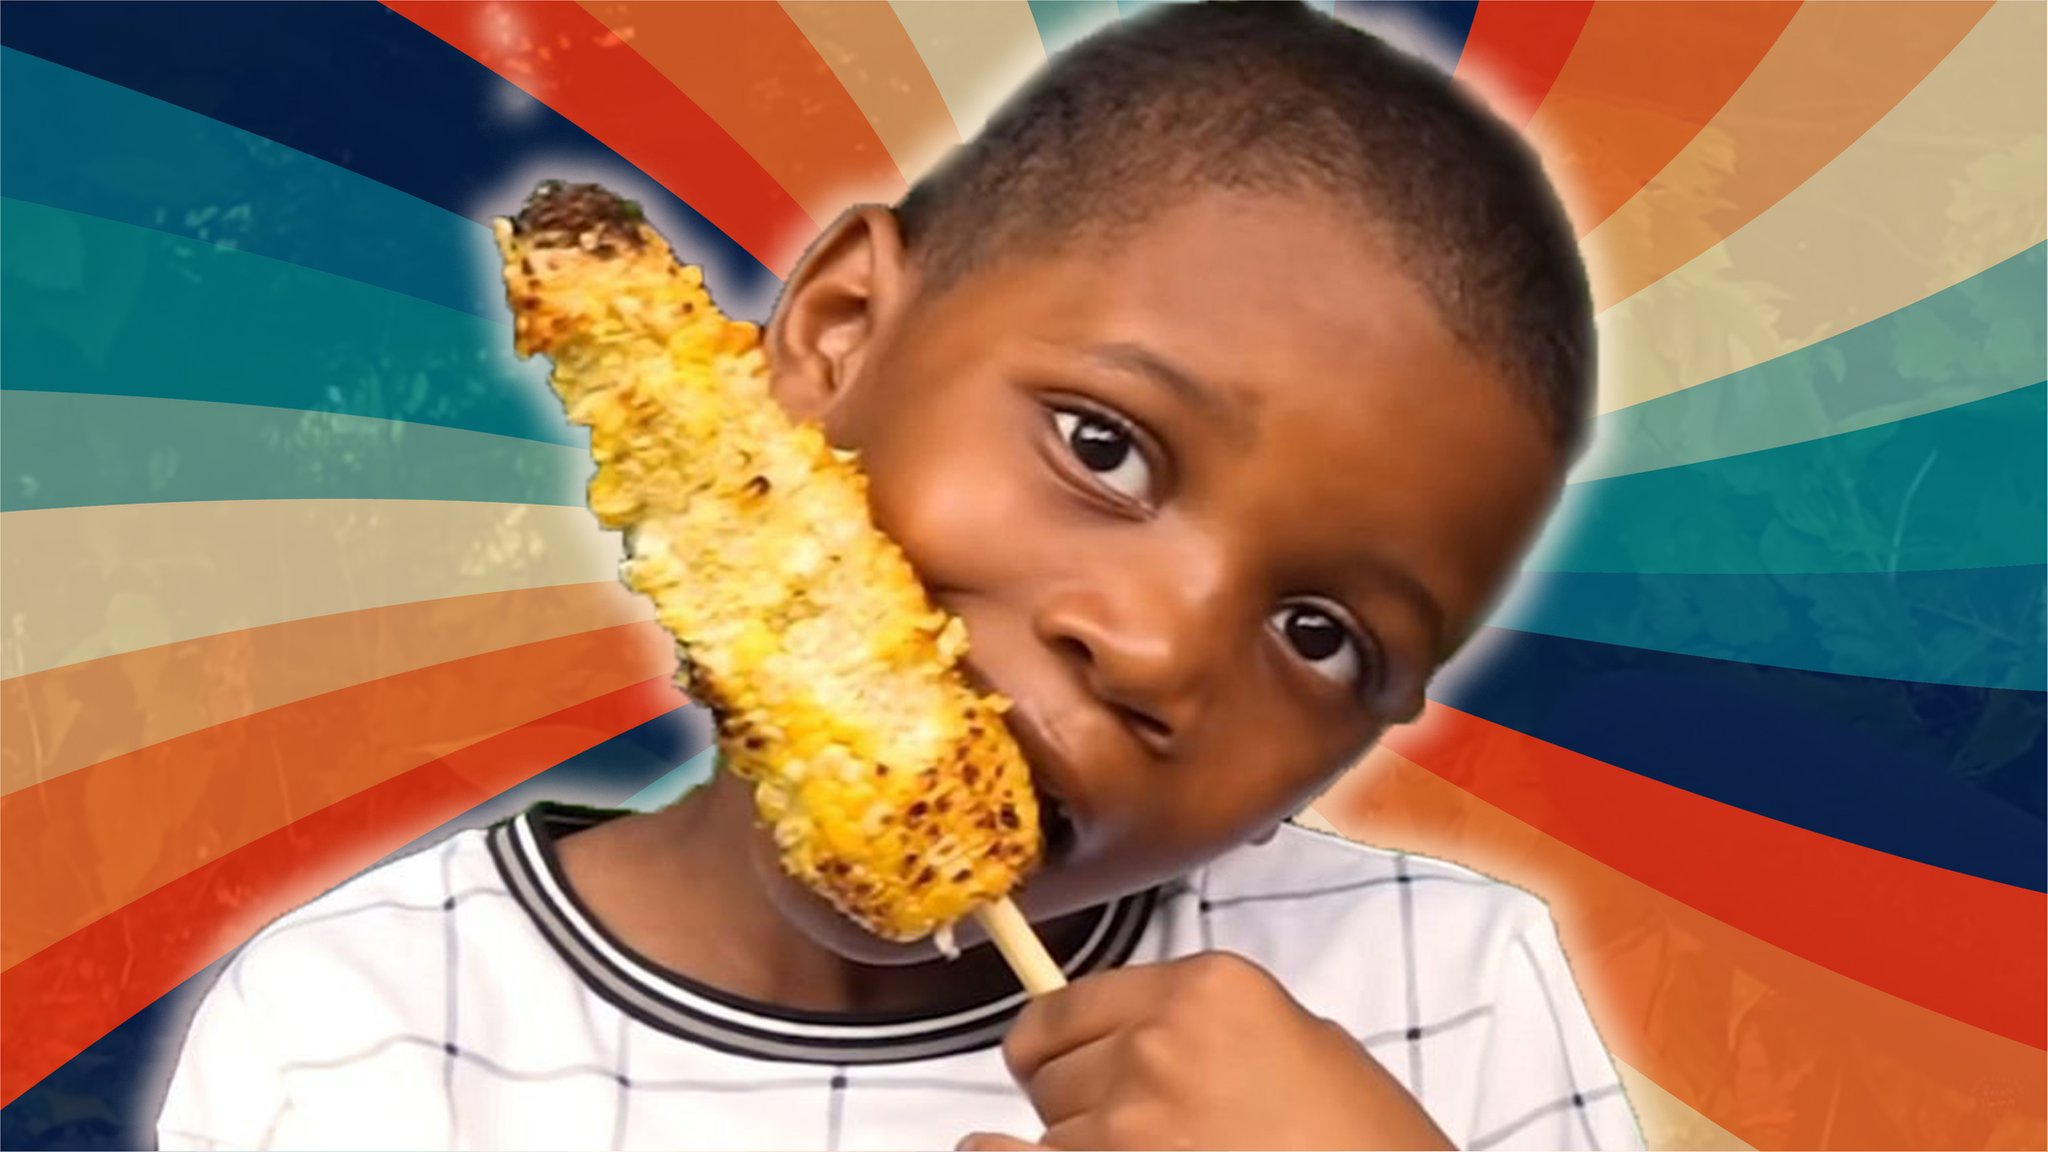 Corn kidz. Its Corn. Phild Corn meme. Corn Kids 64. Corn Kids 64 game.